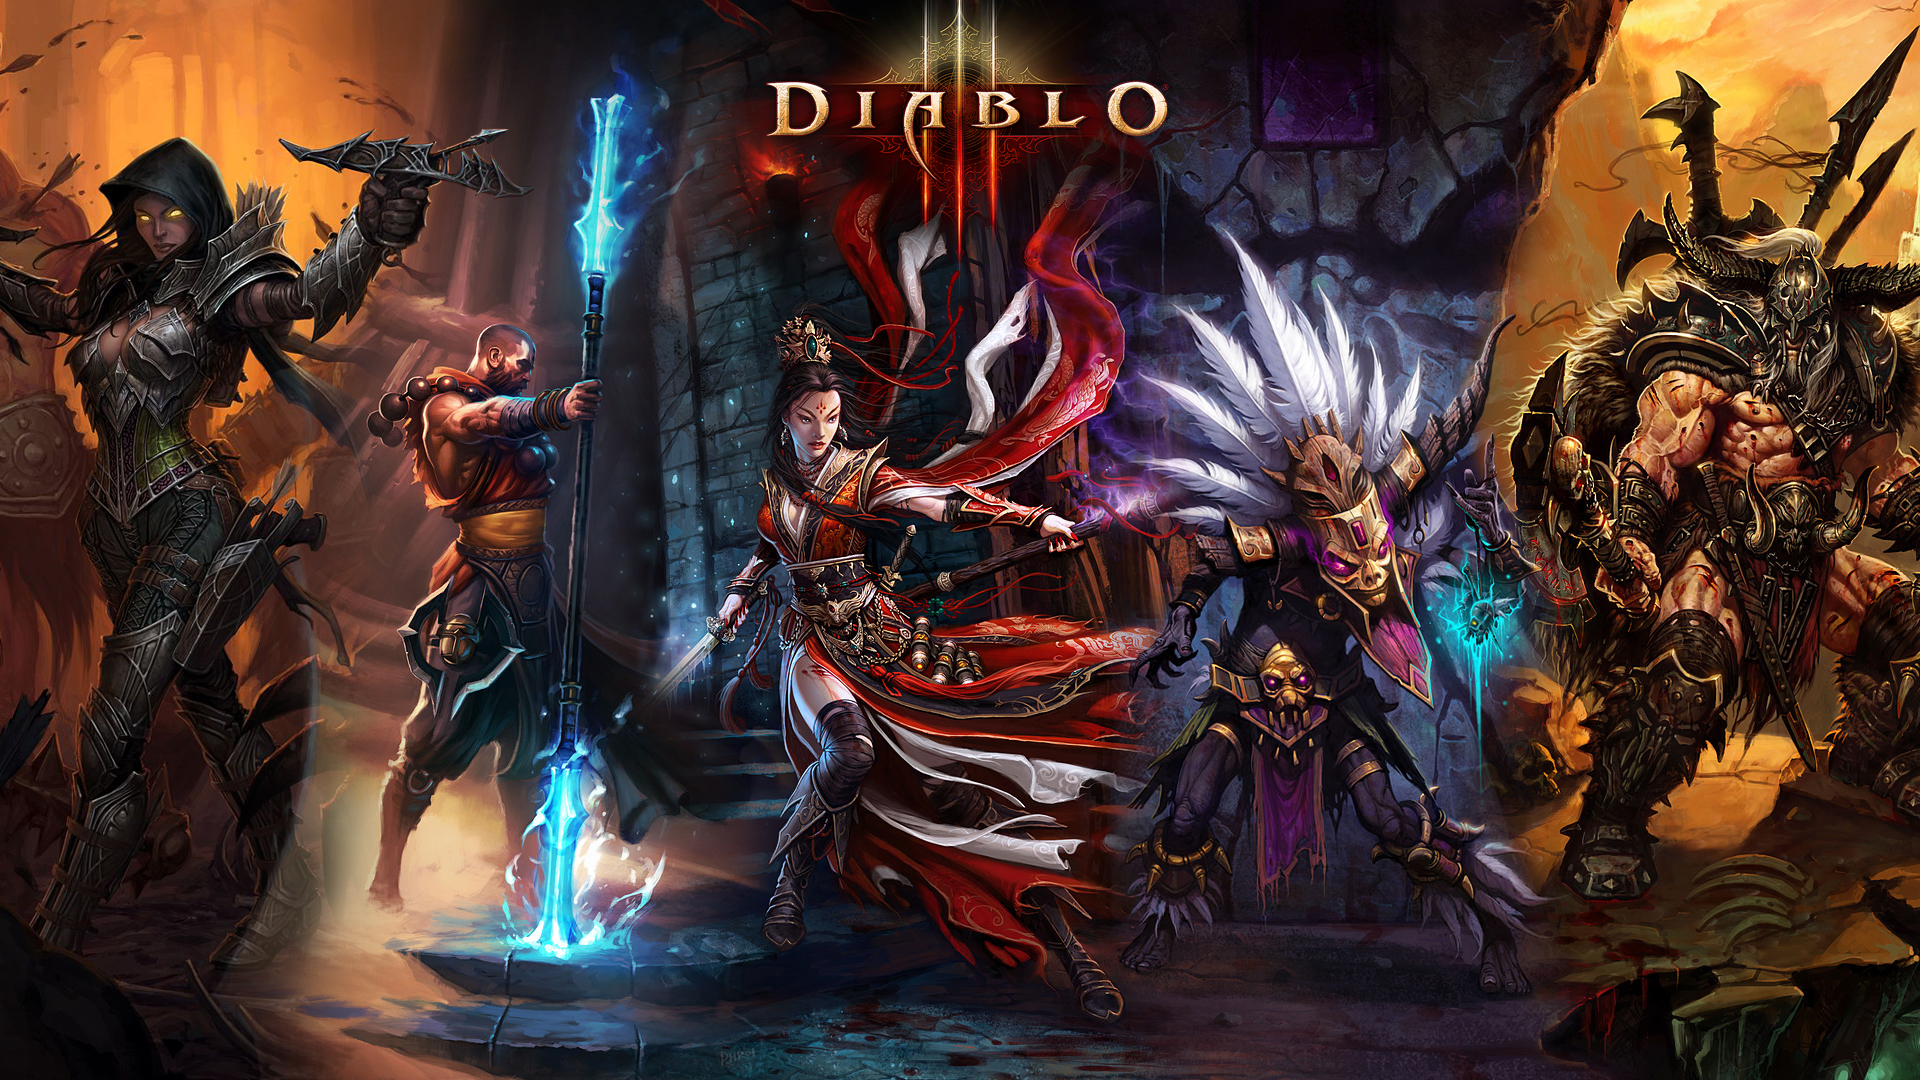 Random Ghost Of Diablo Blizzard Wallpaper